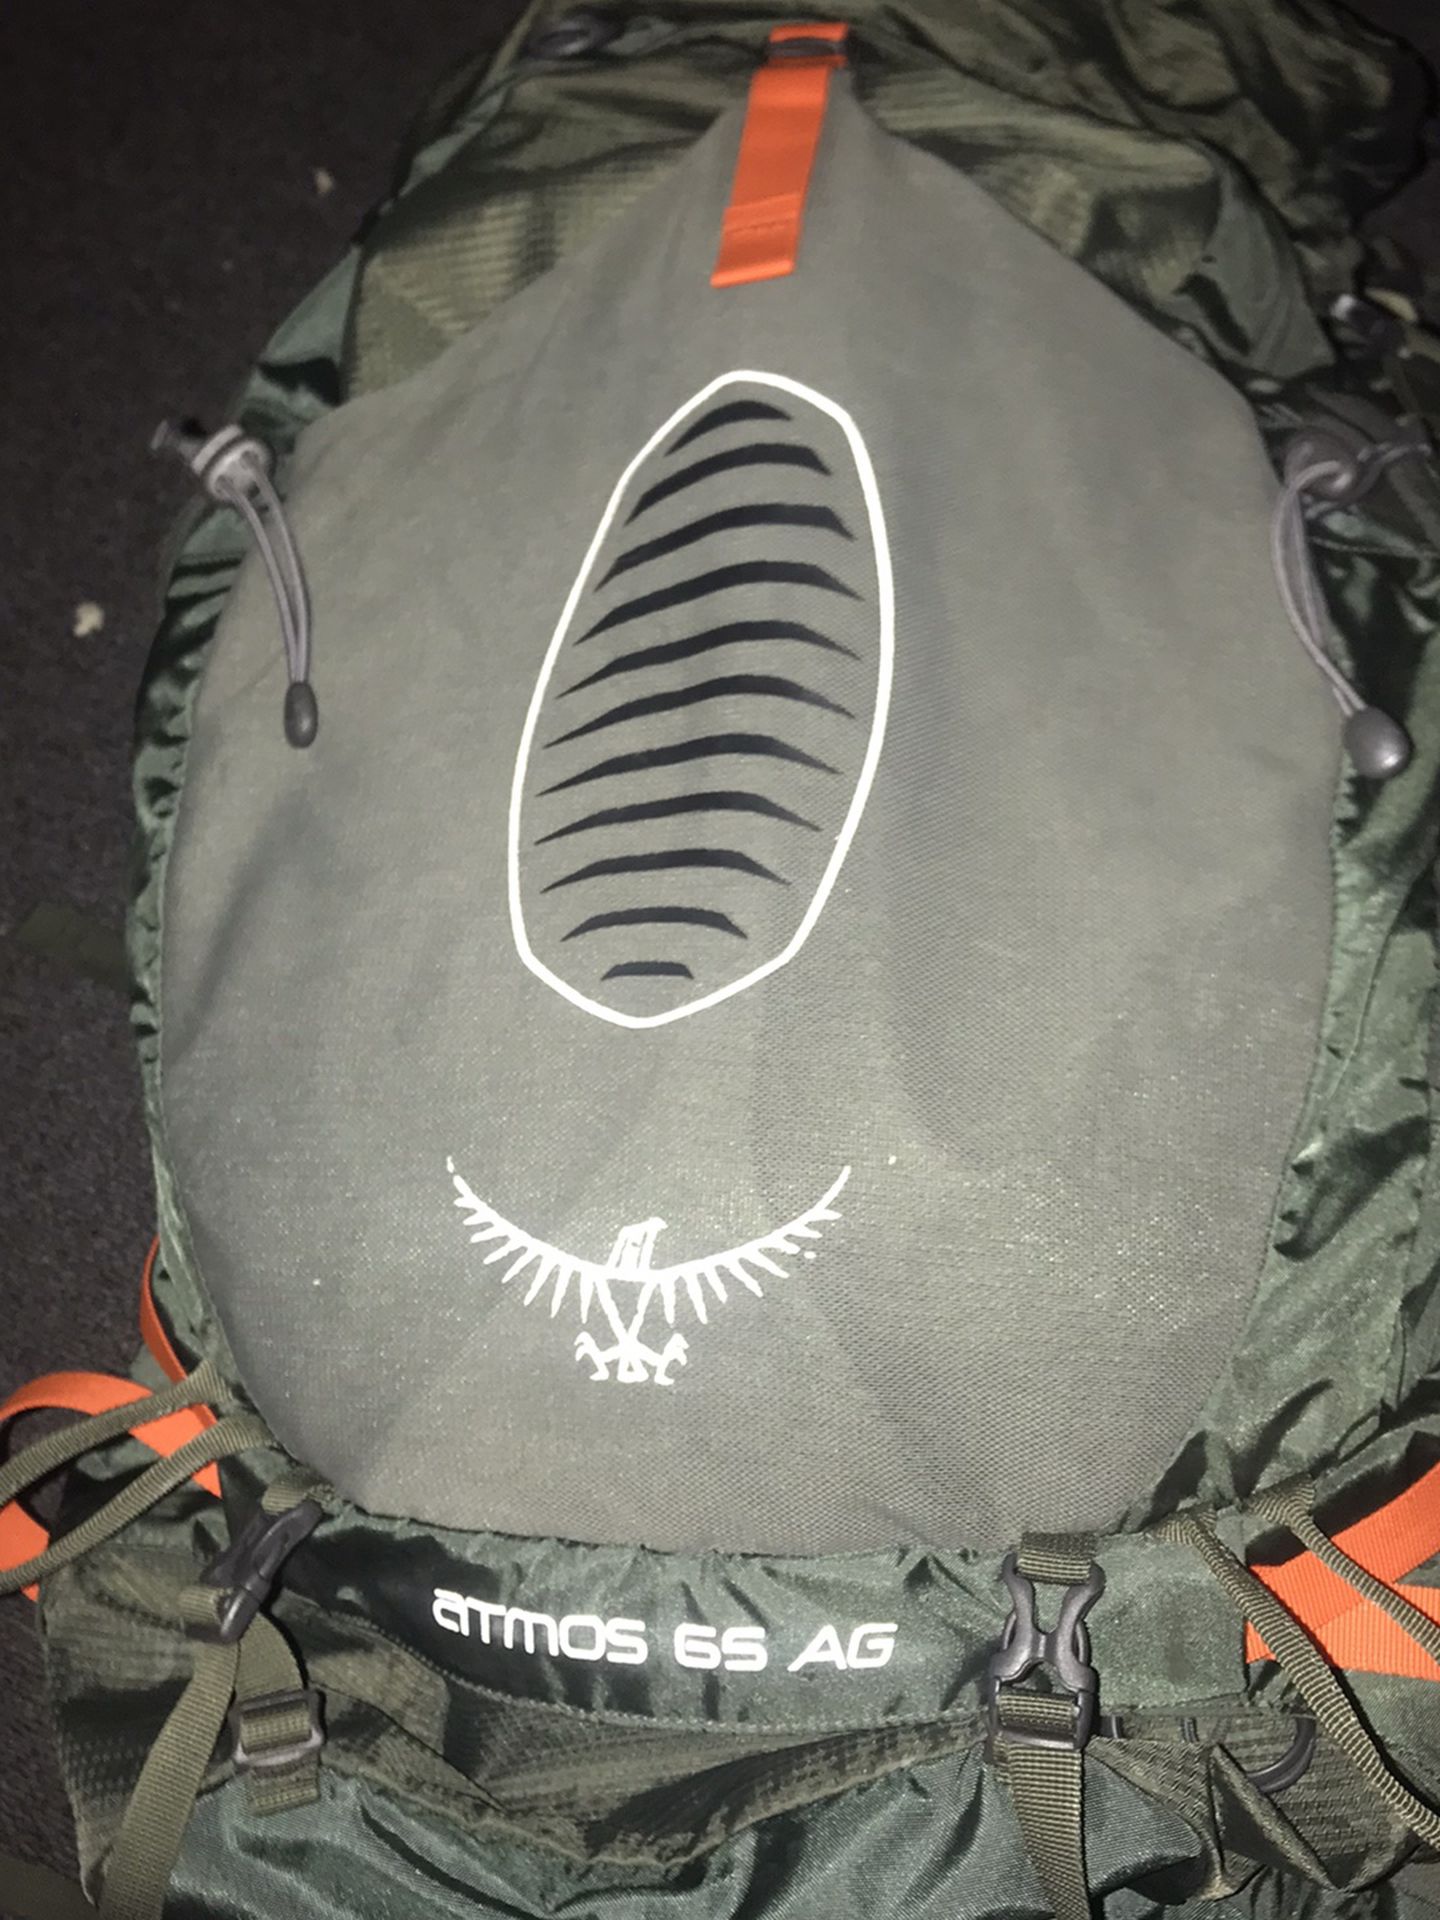 Atmos 65 Ag OSPREY Hiking Backpack